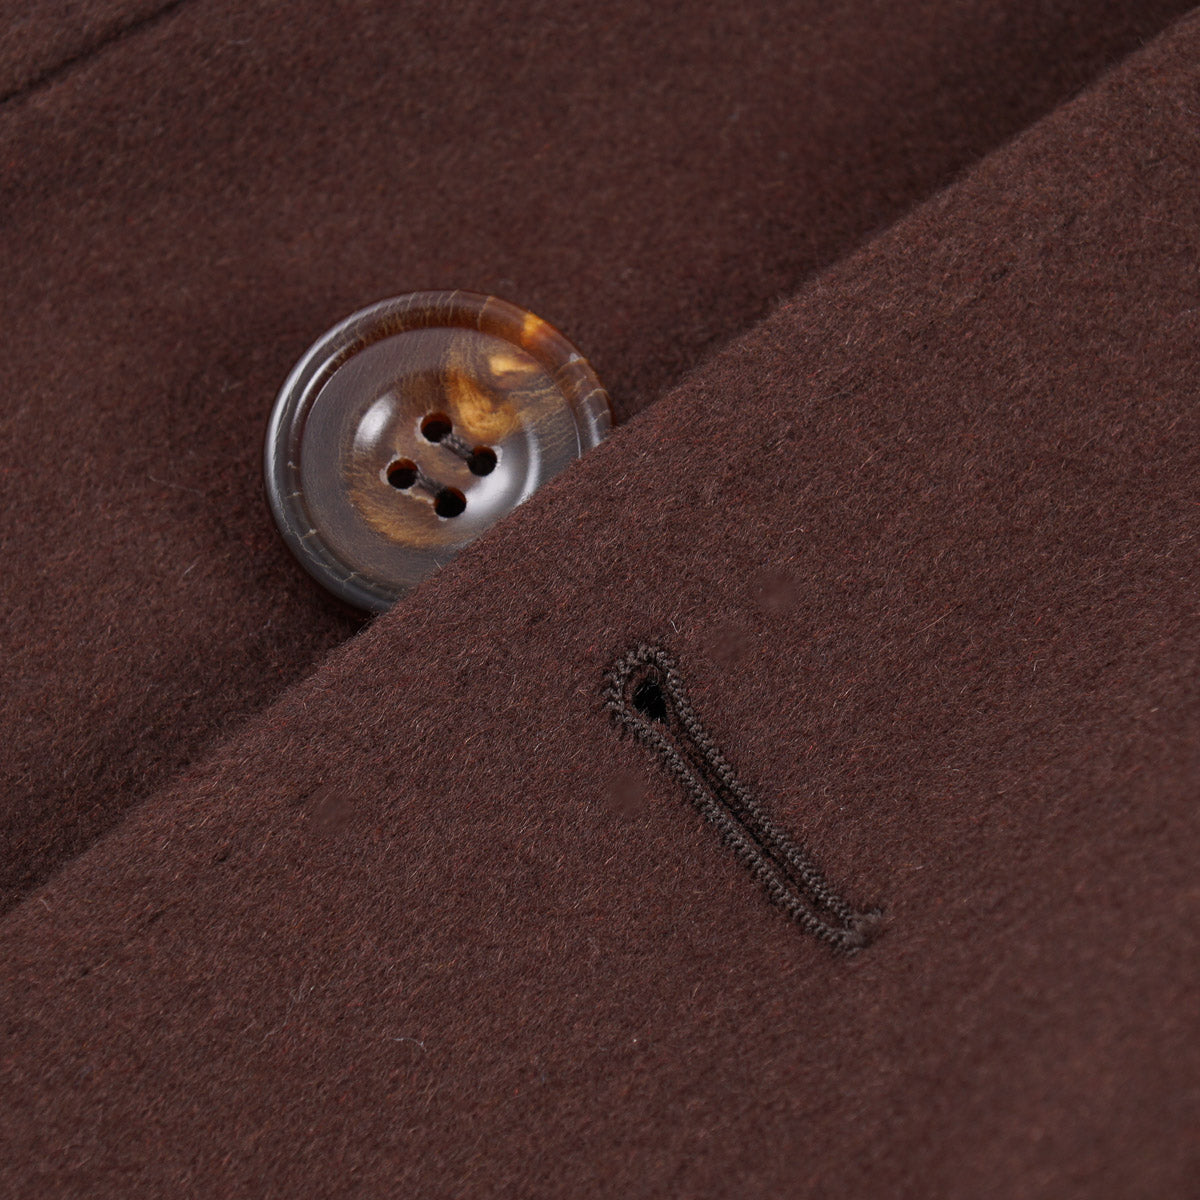 Sartorio Soft Mid-Weight Cashmere Overcoat - Top Shelf Apparel